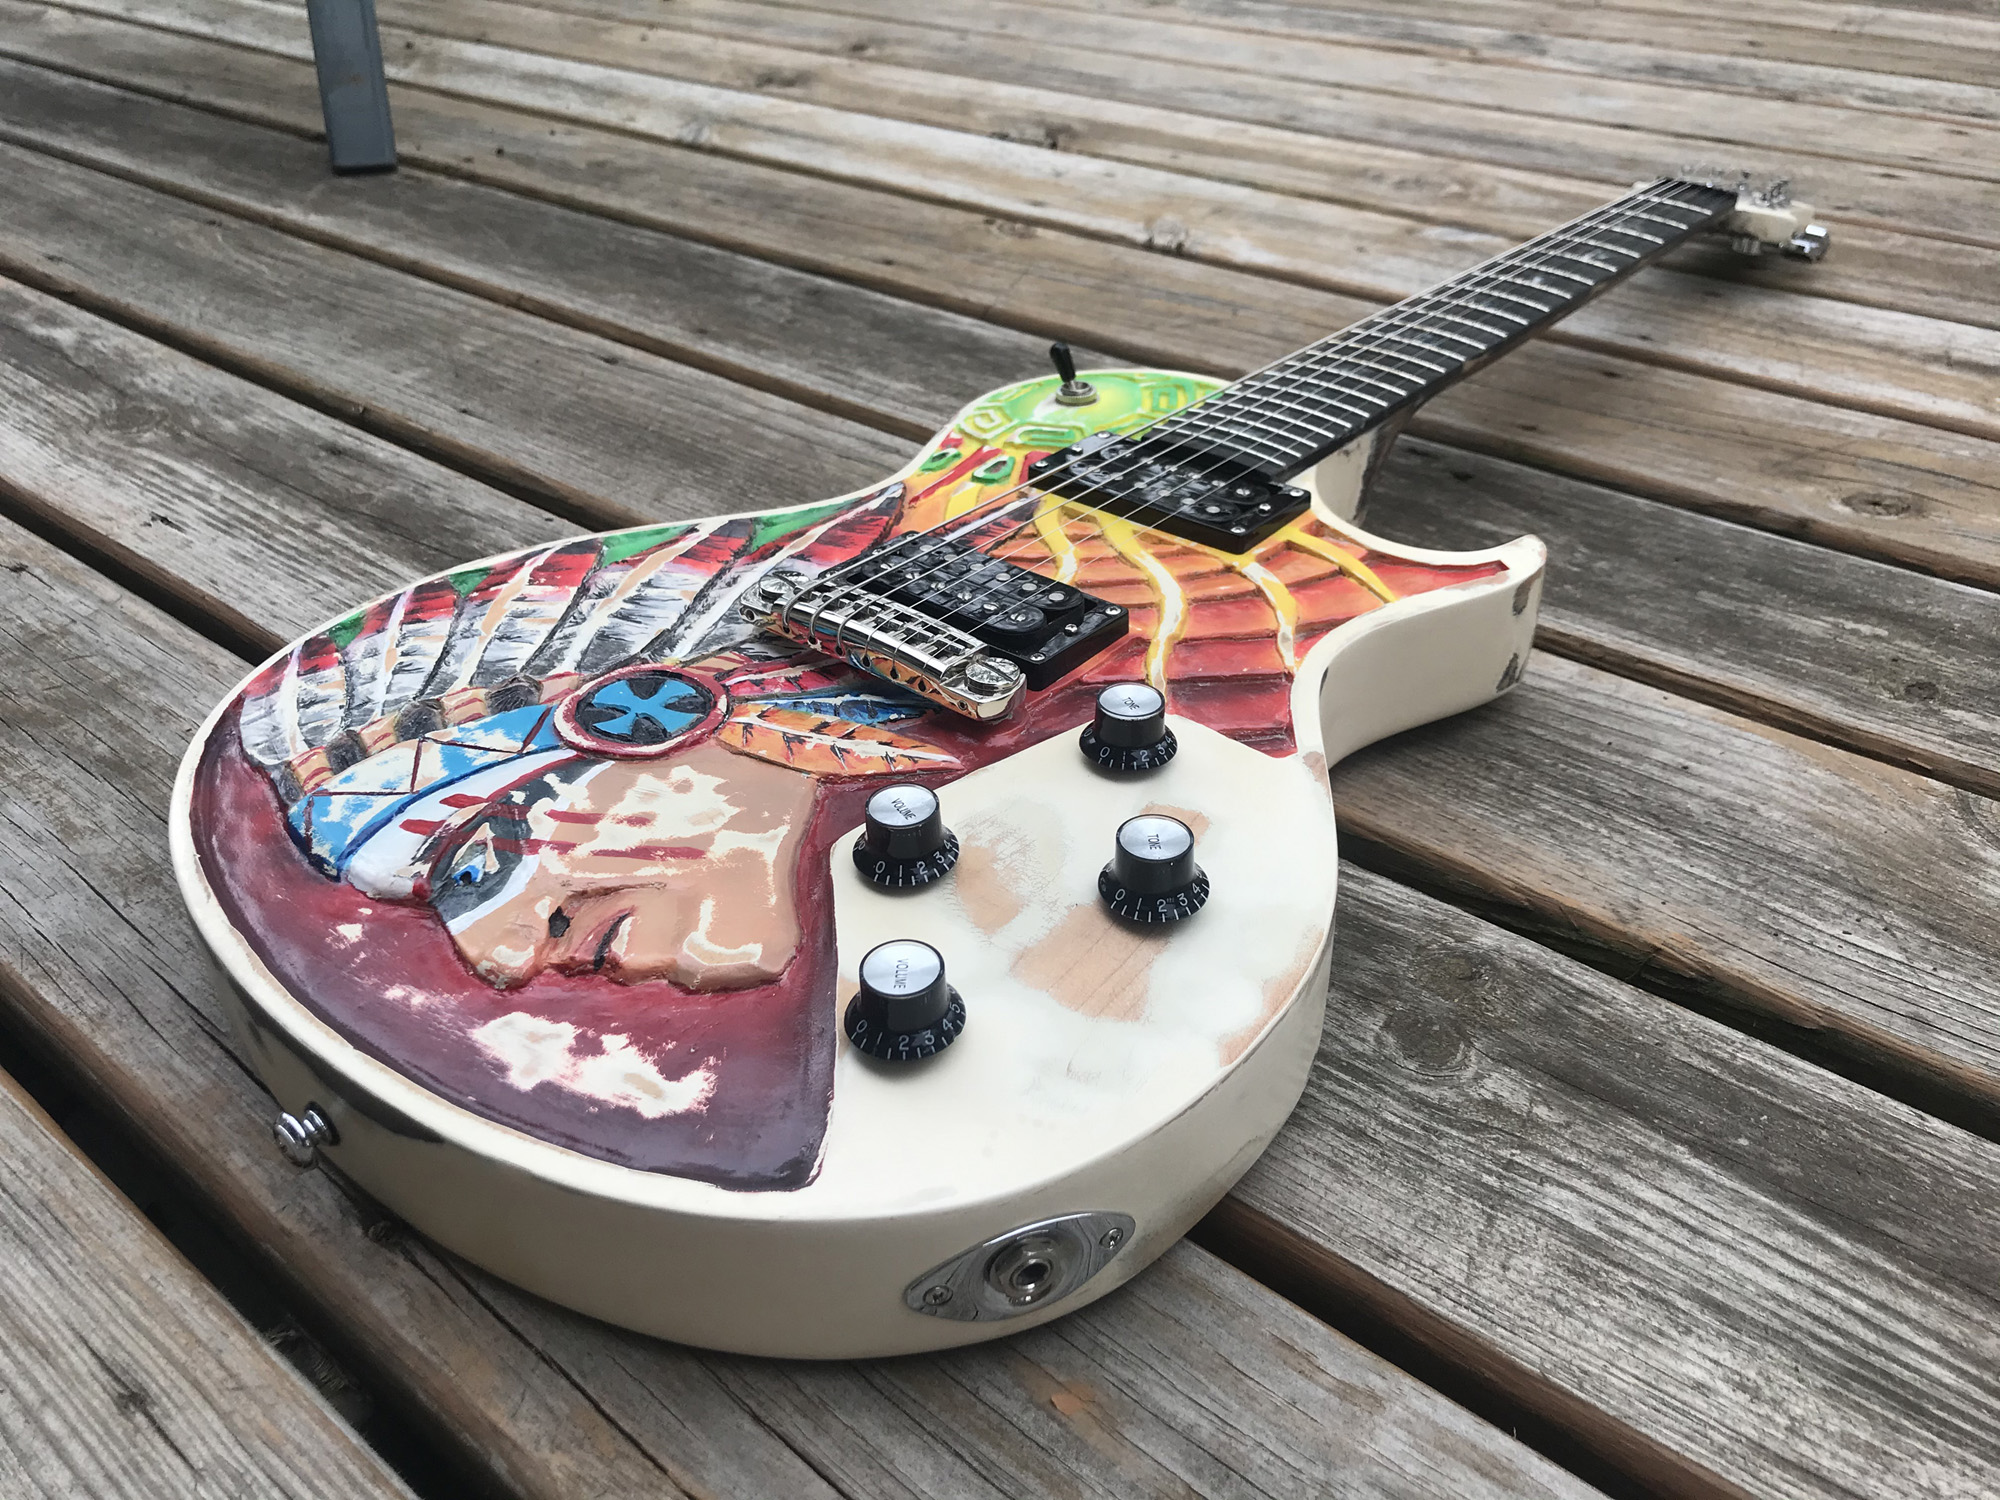 Custom Carved PRS SE Guitar